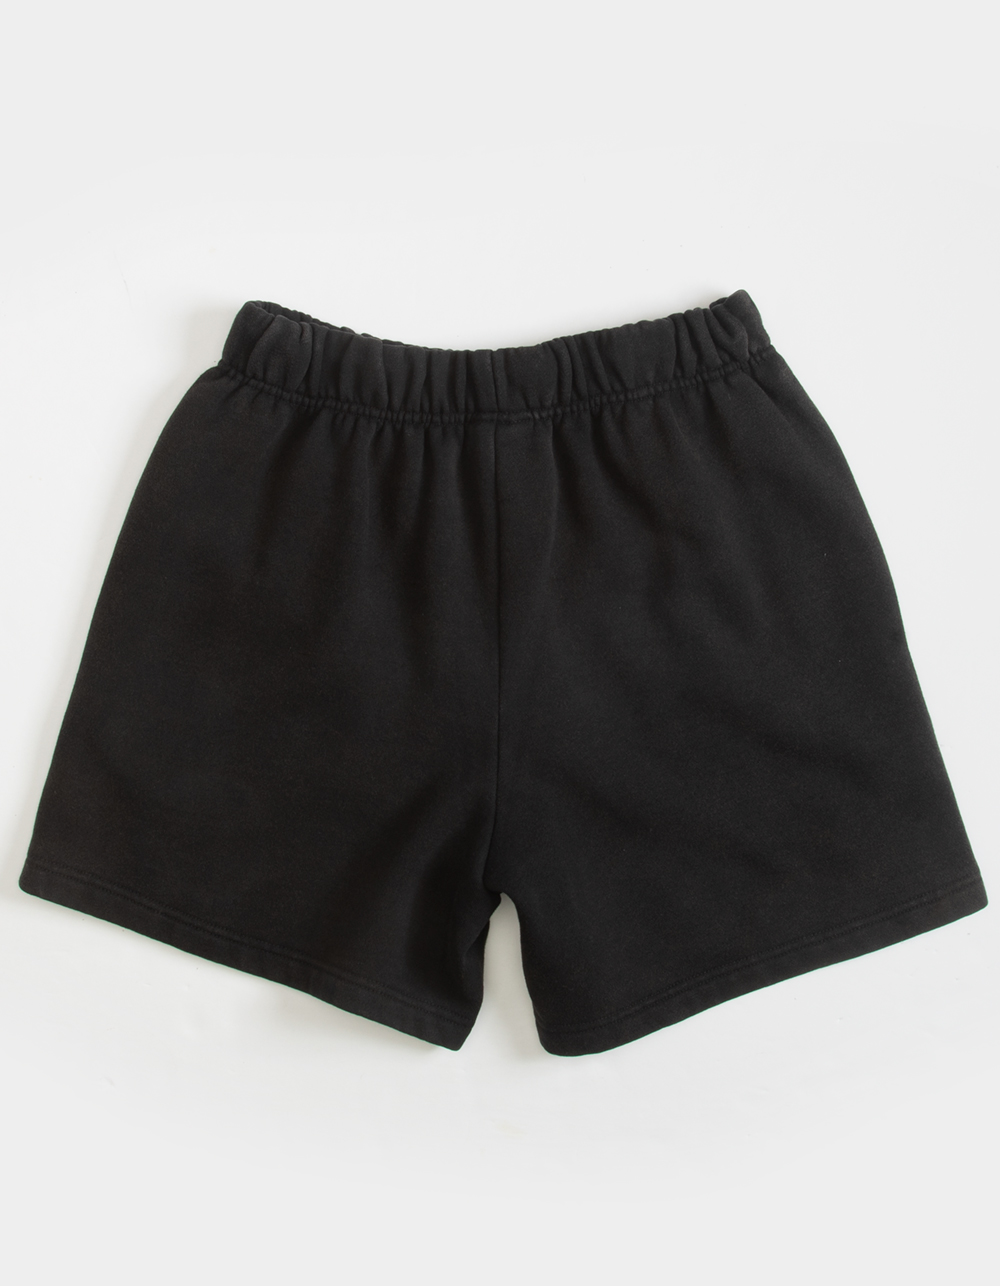 CONEY ISLAND PICNIC Exotics Mens Sweat Shorts - BLACK | Tillys